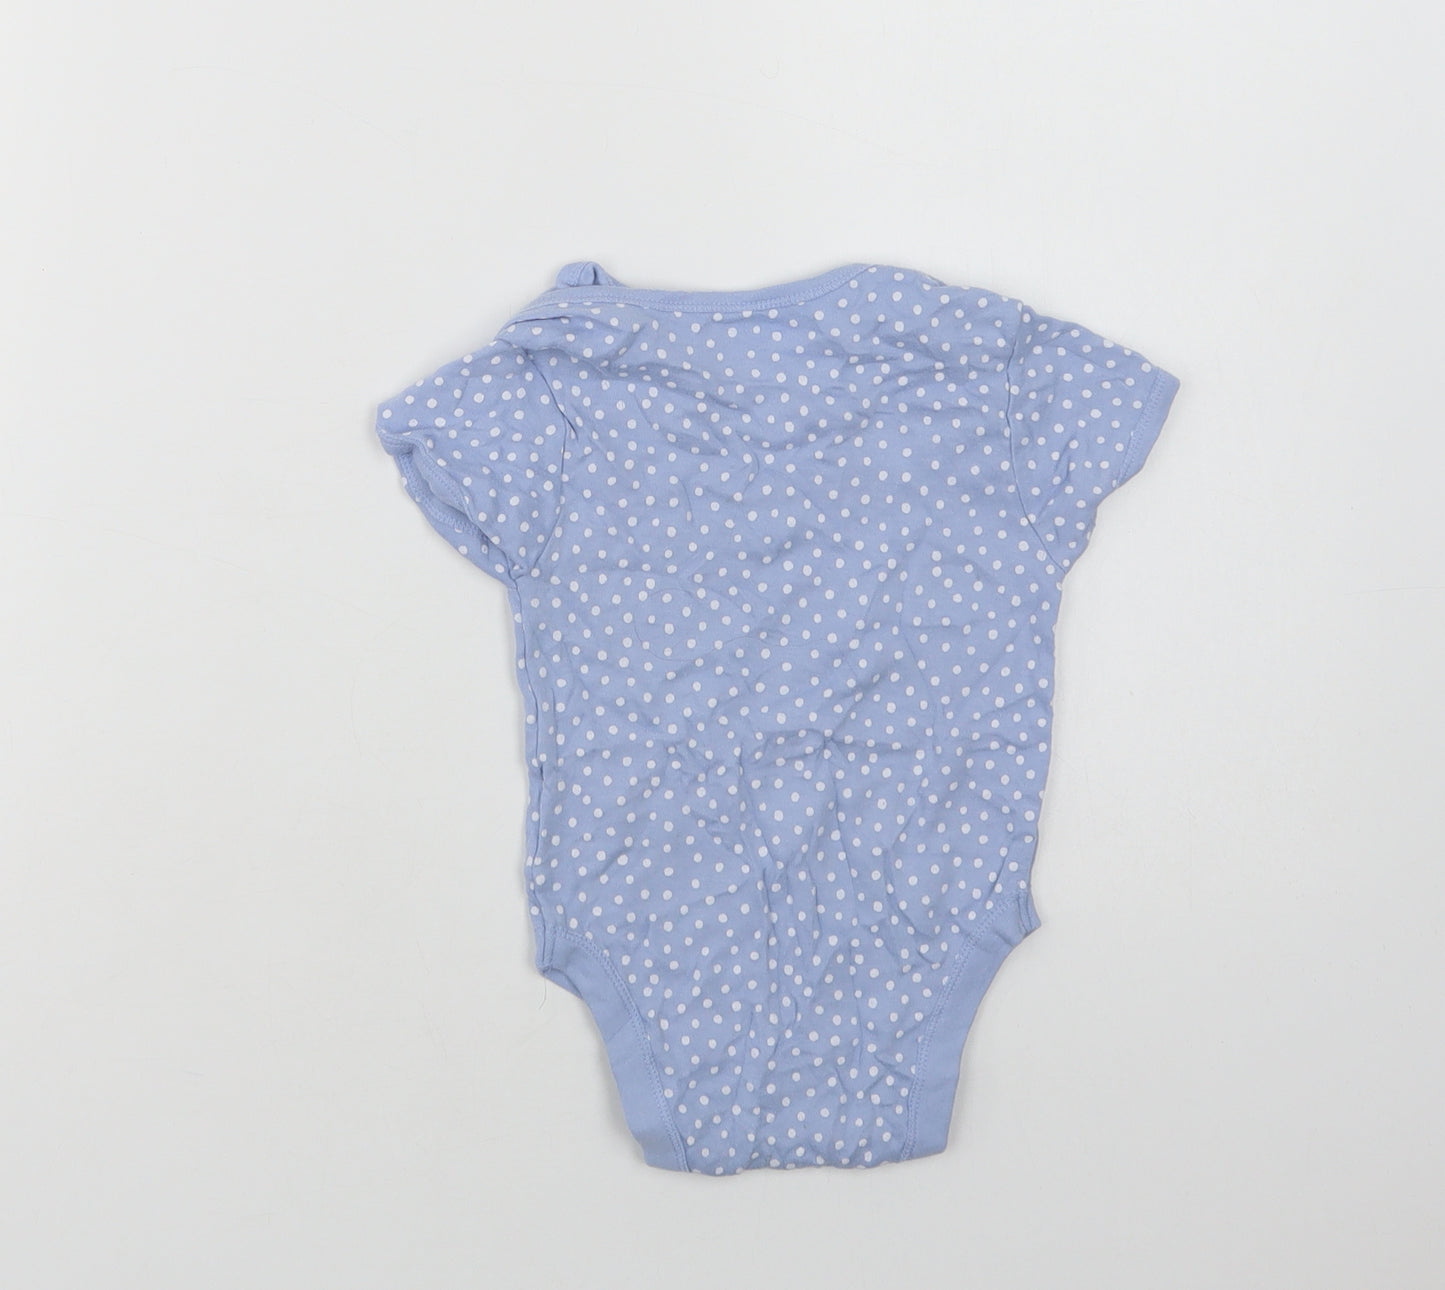 Primark Baby Blue Polka Dot Cotton Romper One-Piece Size 12-18 Months  Snap